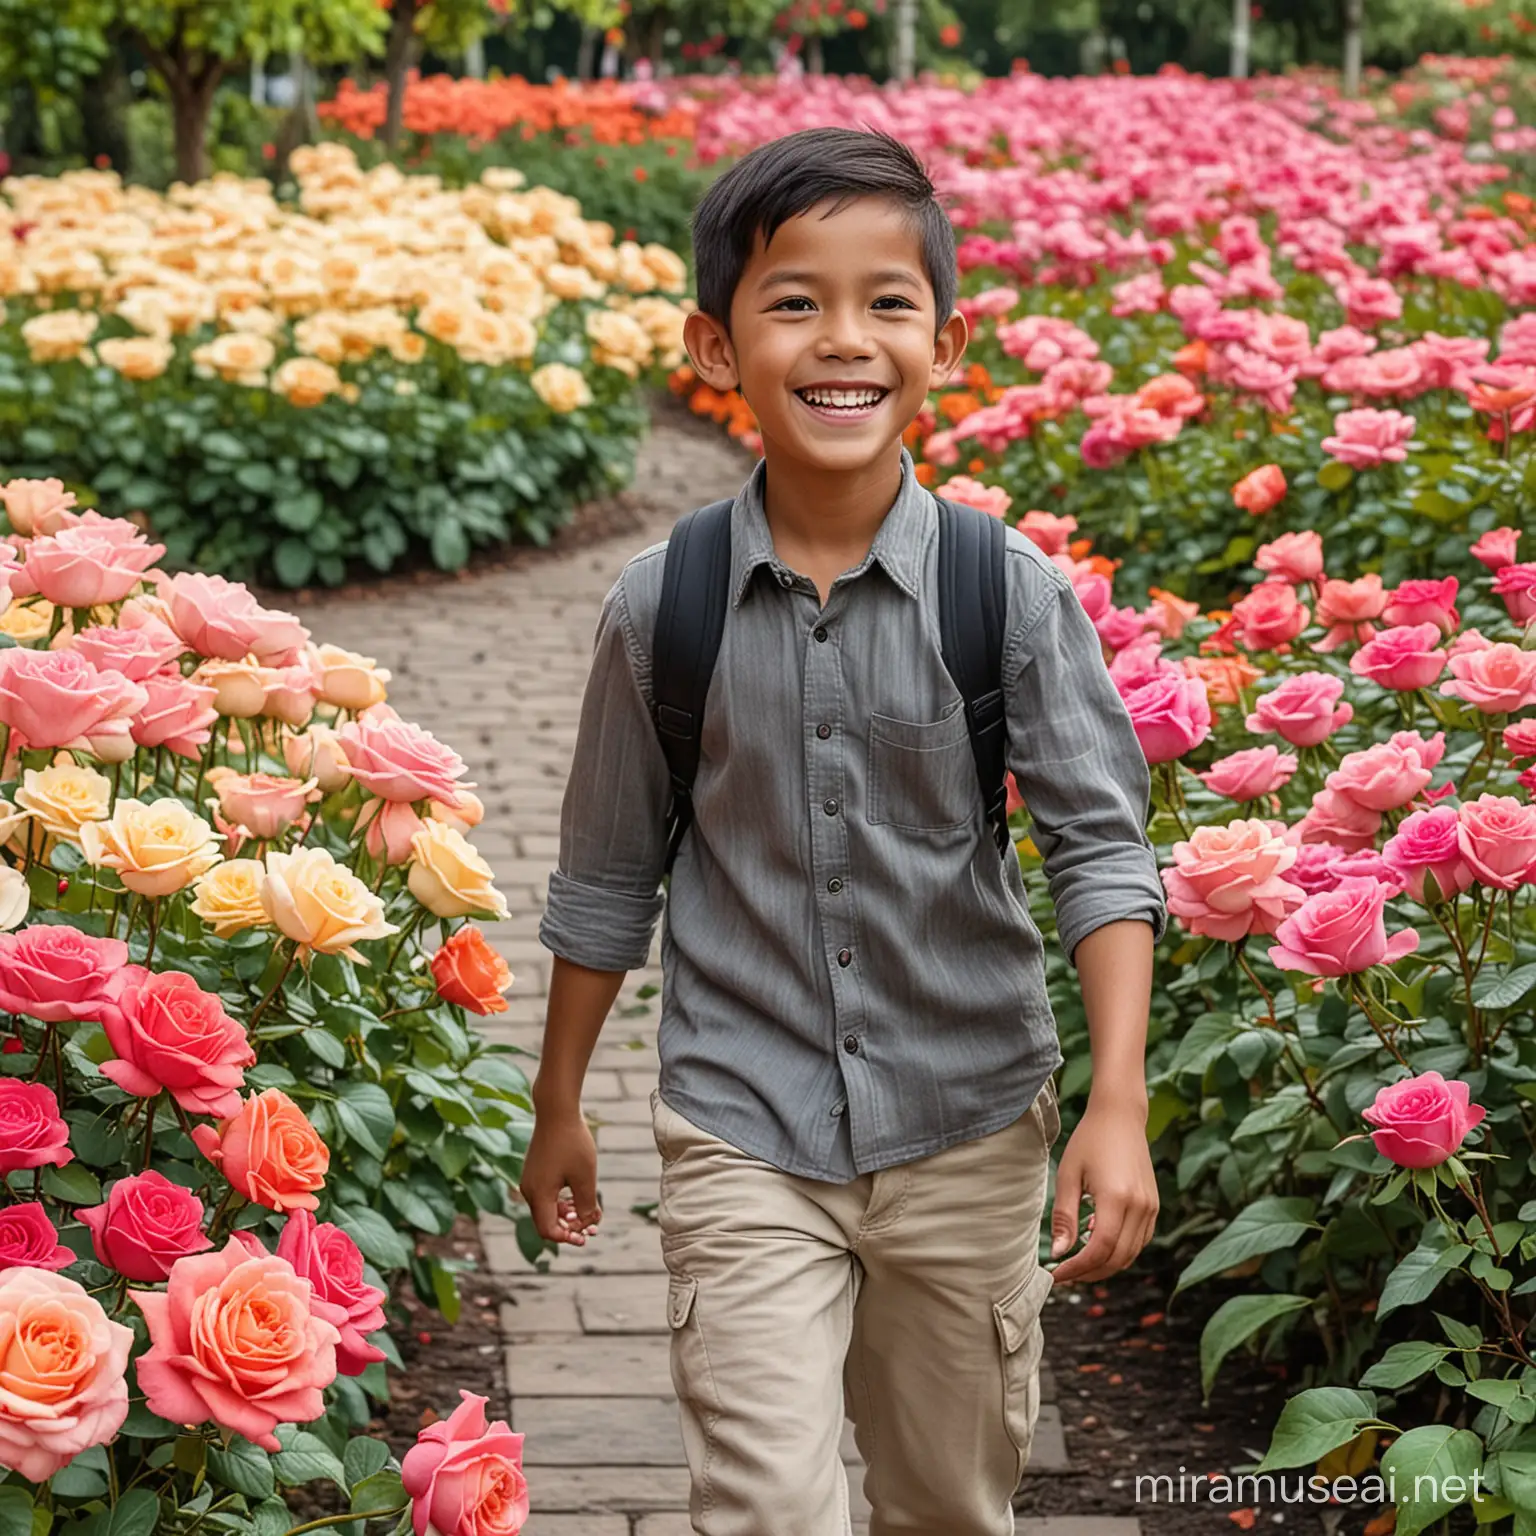 Seorang anak laki laki usia 10 tahun, tampan wajah jawa indonesia, tersenyum bahagia menggendong balita laki laki nya yang ber usia 3 tahun...berjalan berkeliling taman bunga mawar warna warni.
Baiground taman bunga yang indah